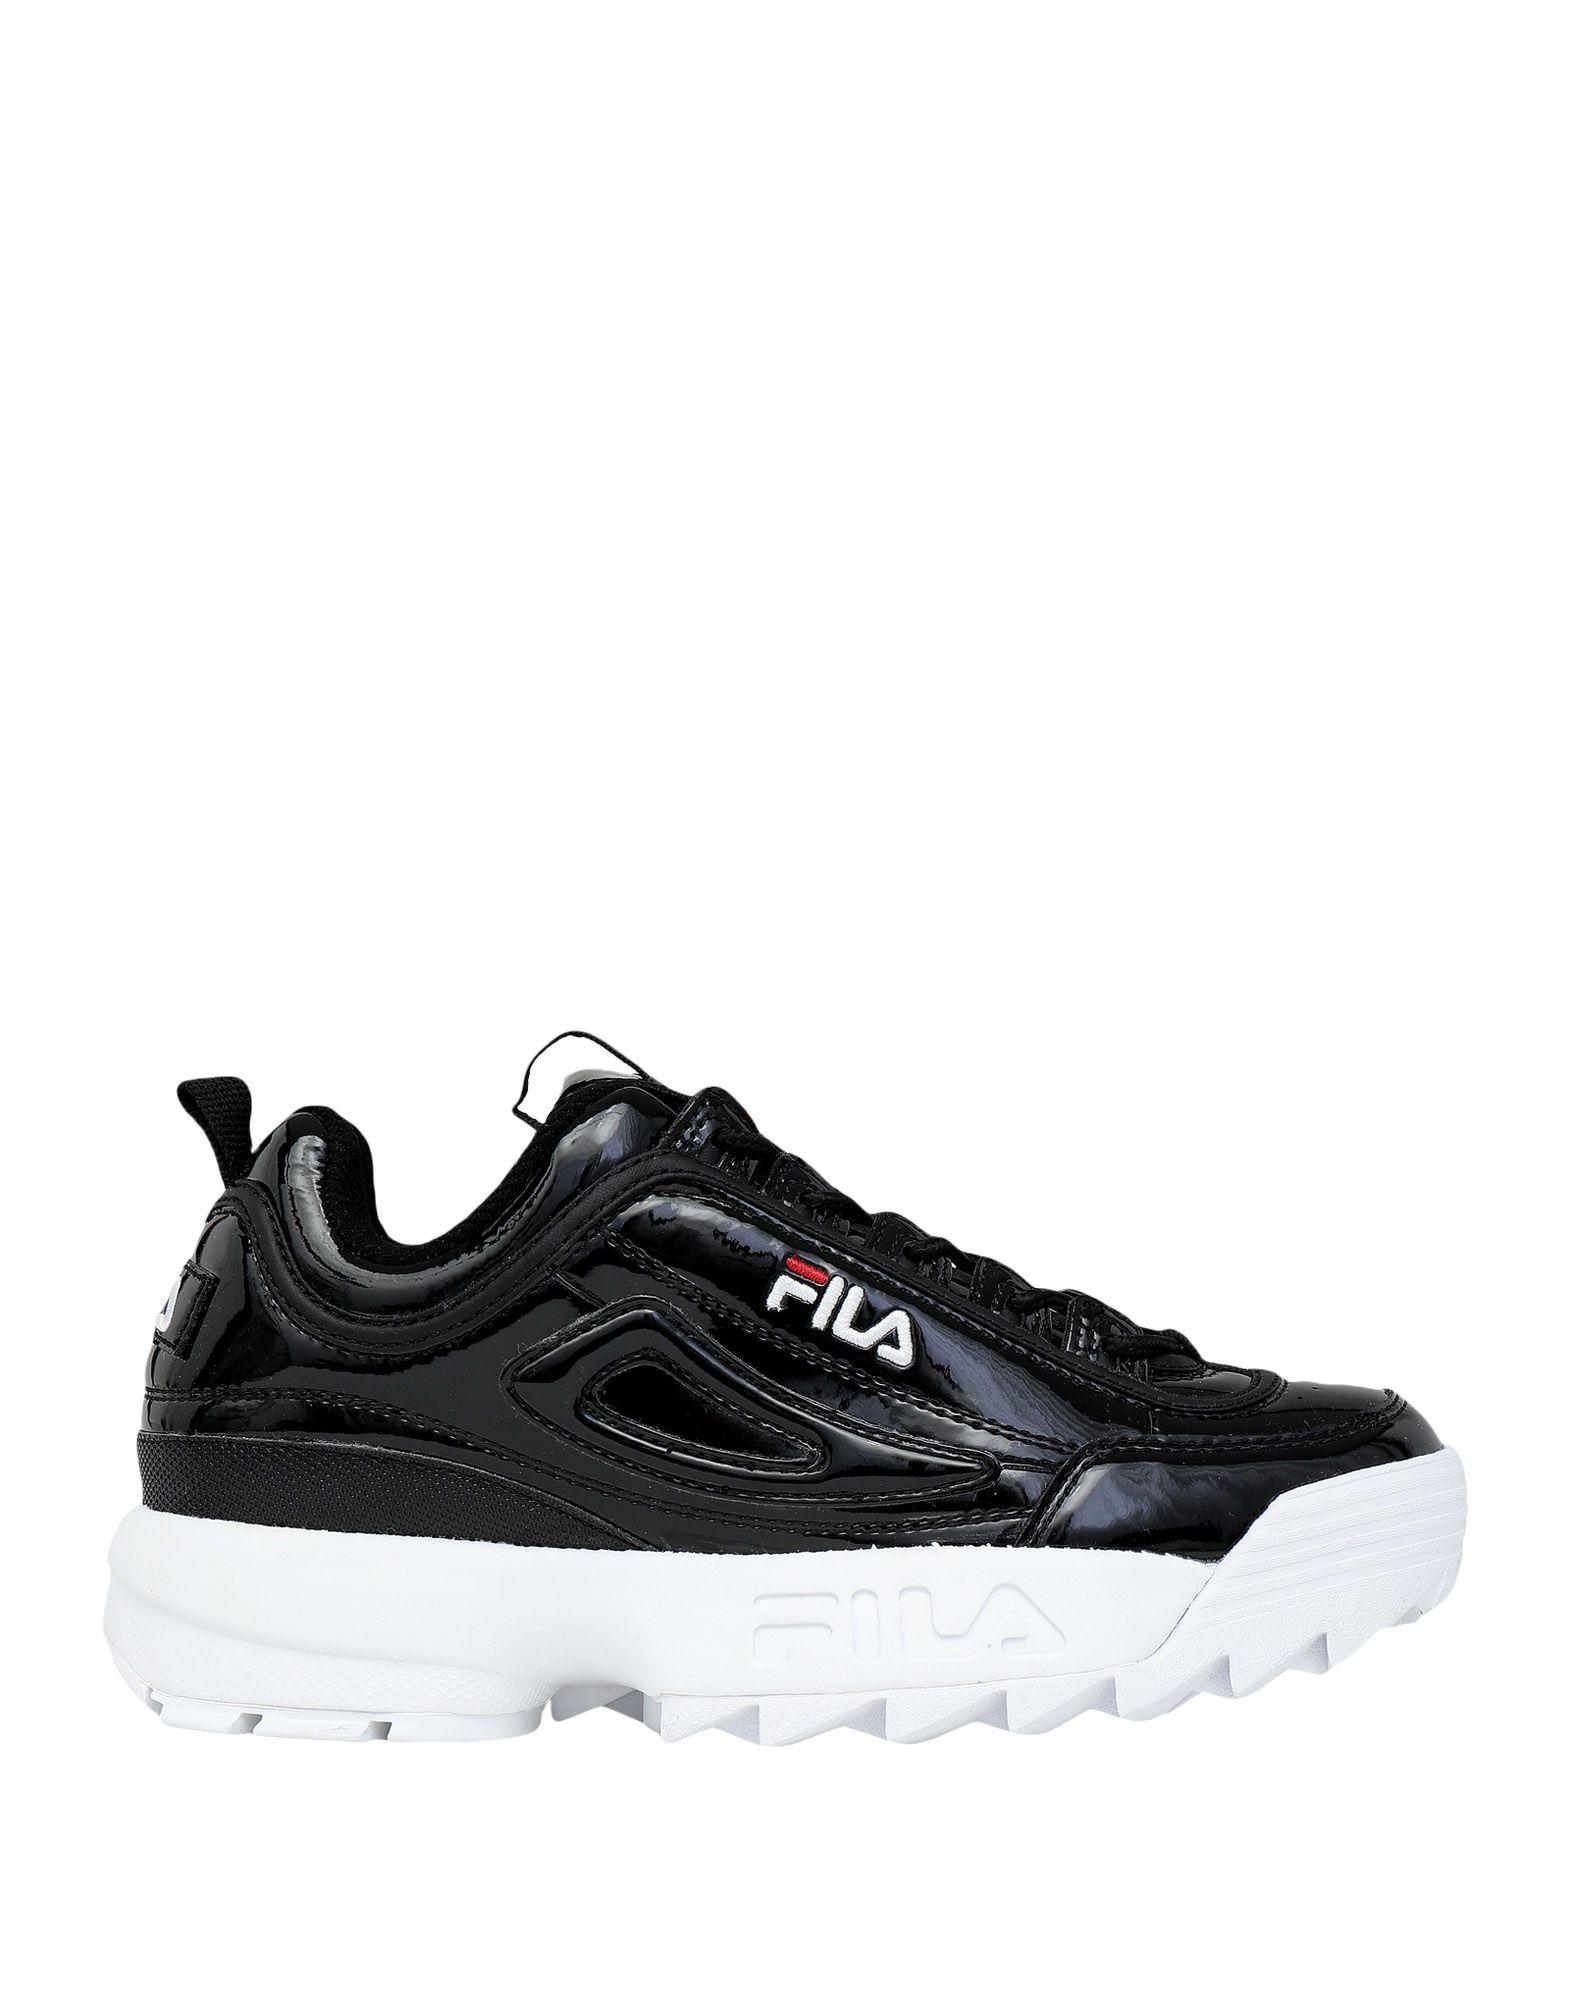 Fila Low-tops & Sneakers in Black - Save 46% - Lyst